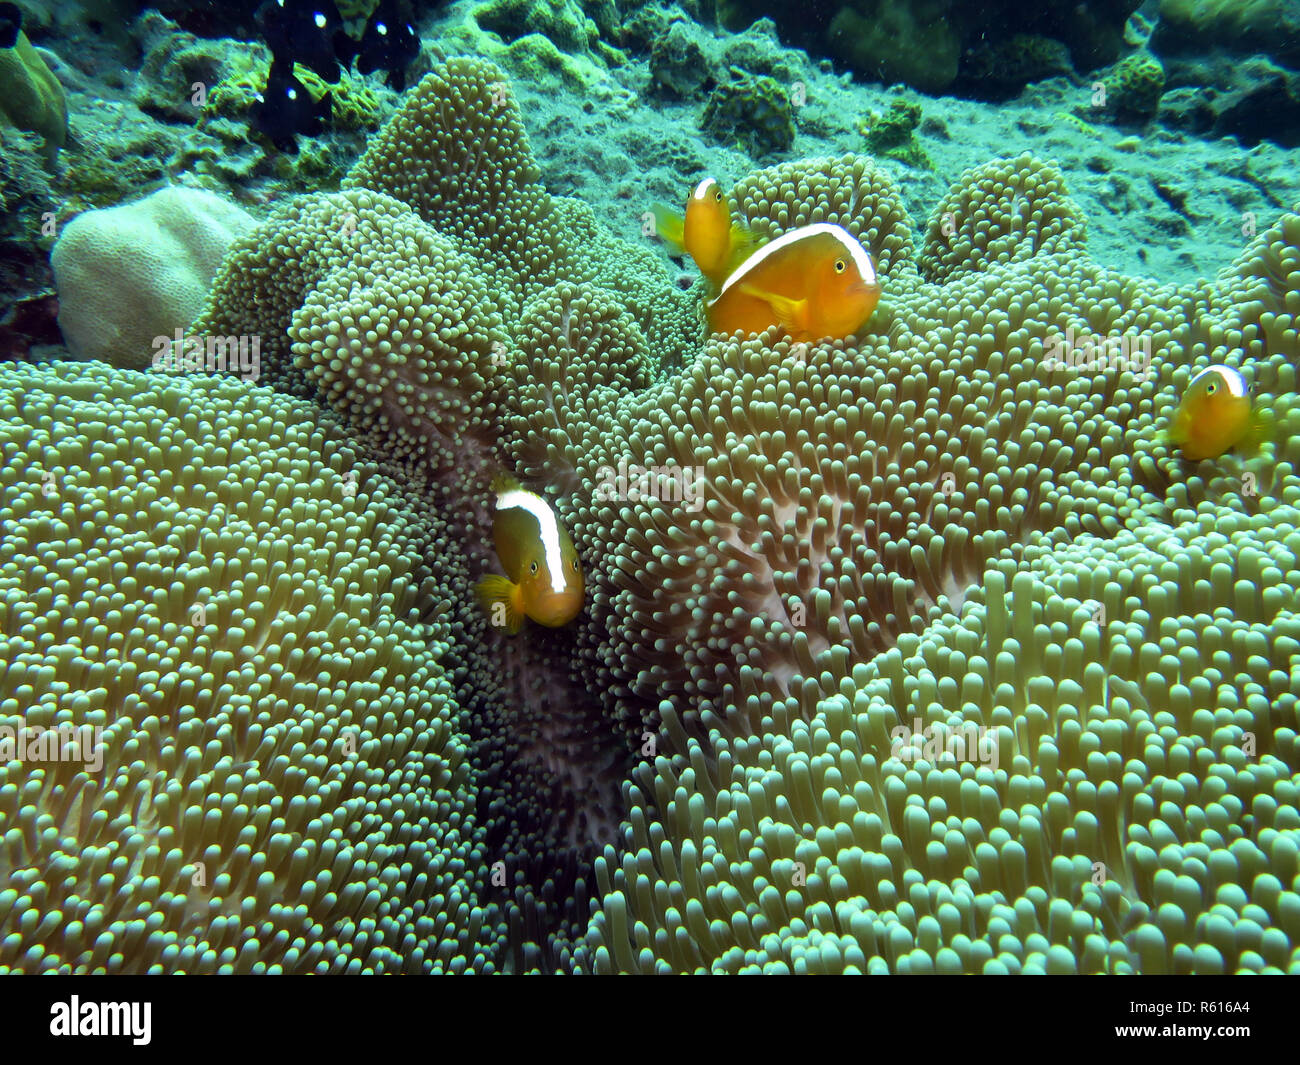 mertens anemone (stichodactyla mertensii) with yellow anemonefish (amphiprion sandaracinos) Stock Photo